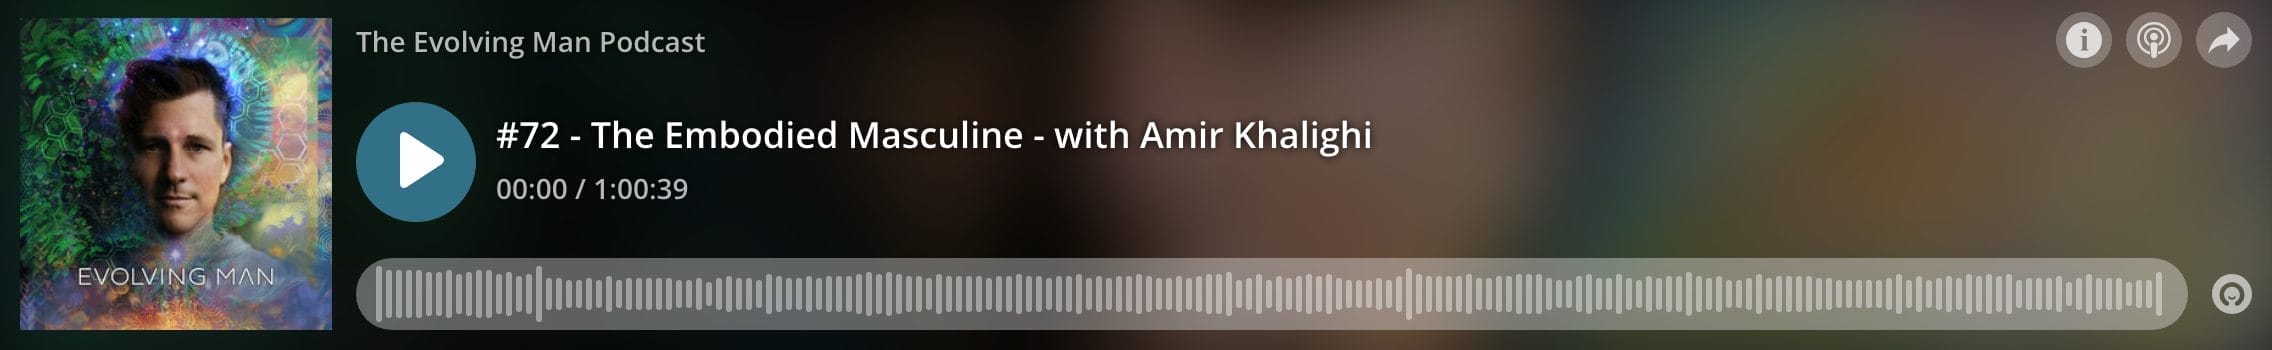 amir khalighi on evolving man podcast